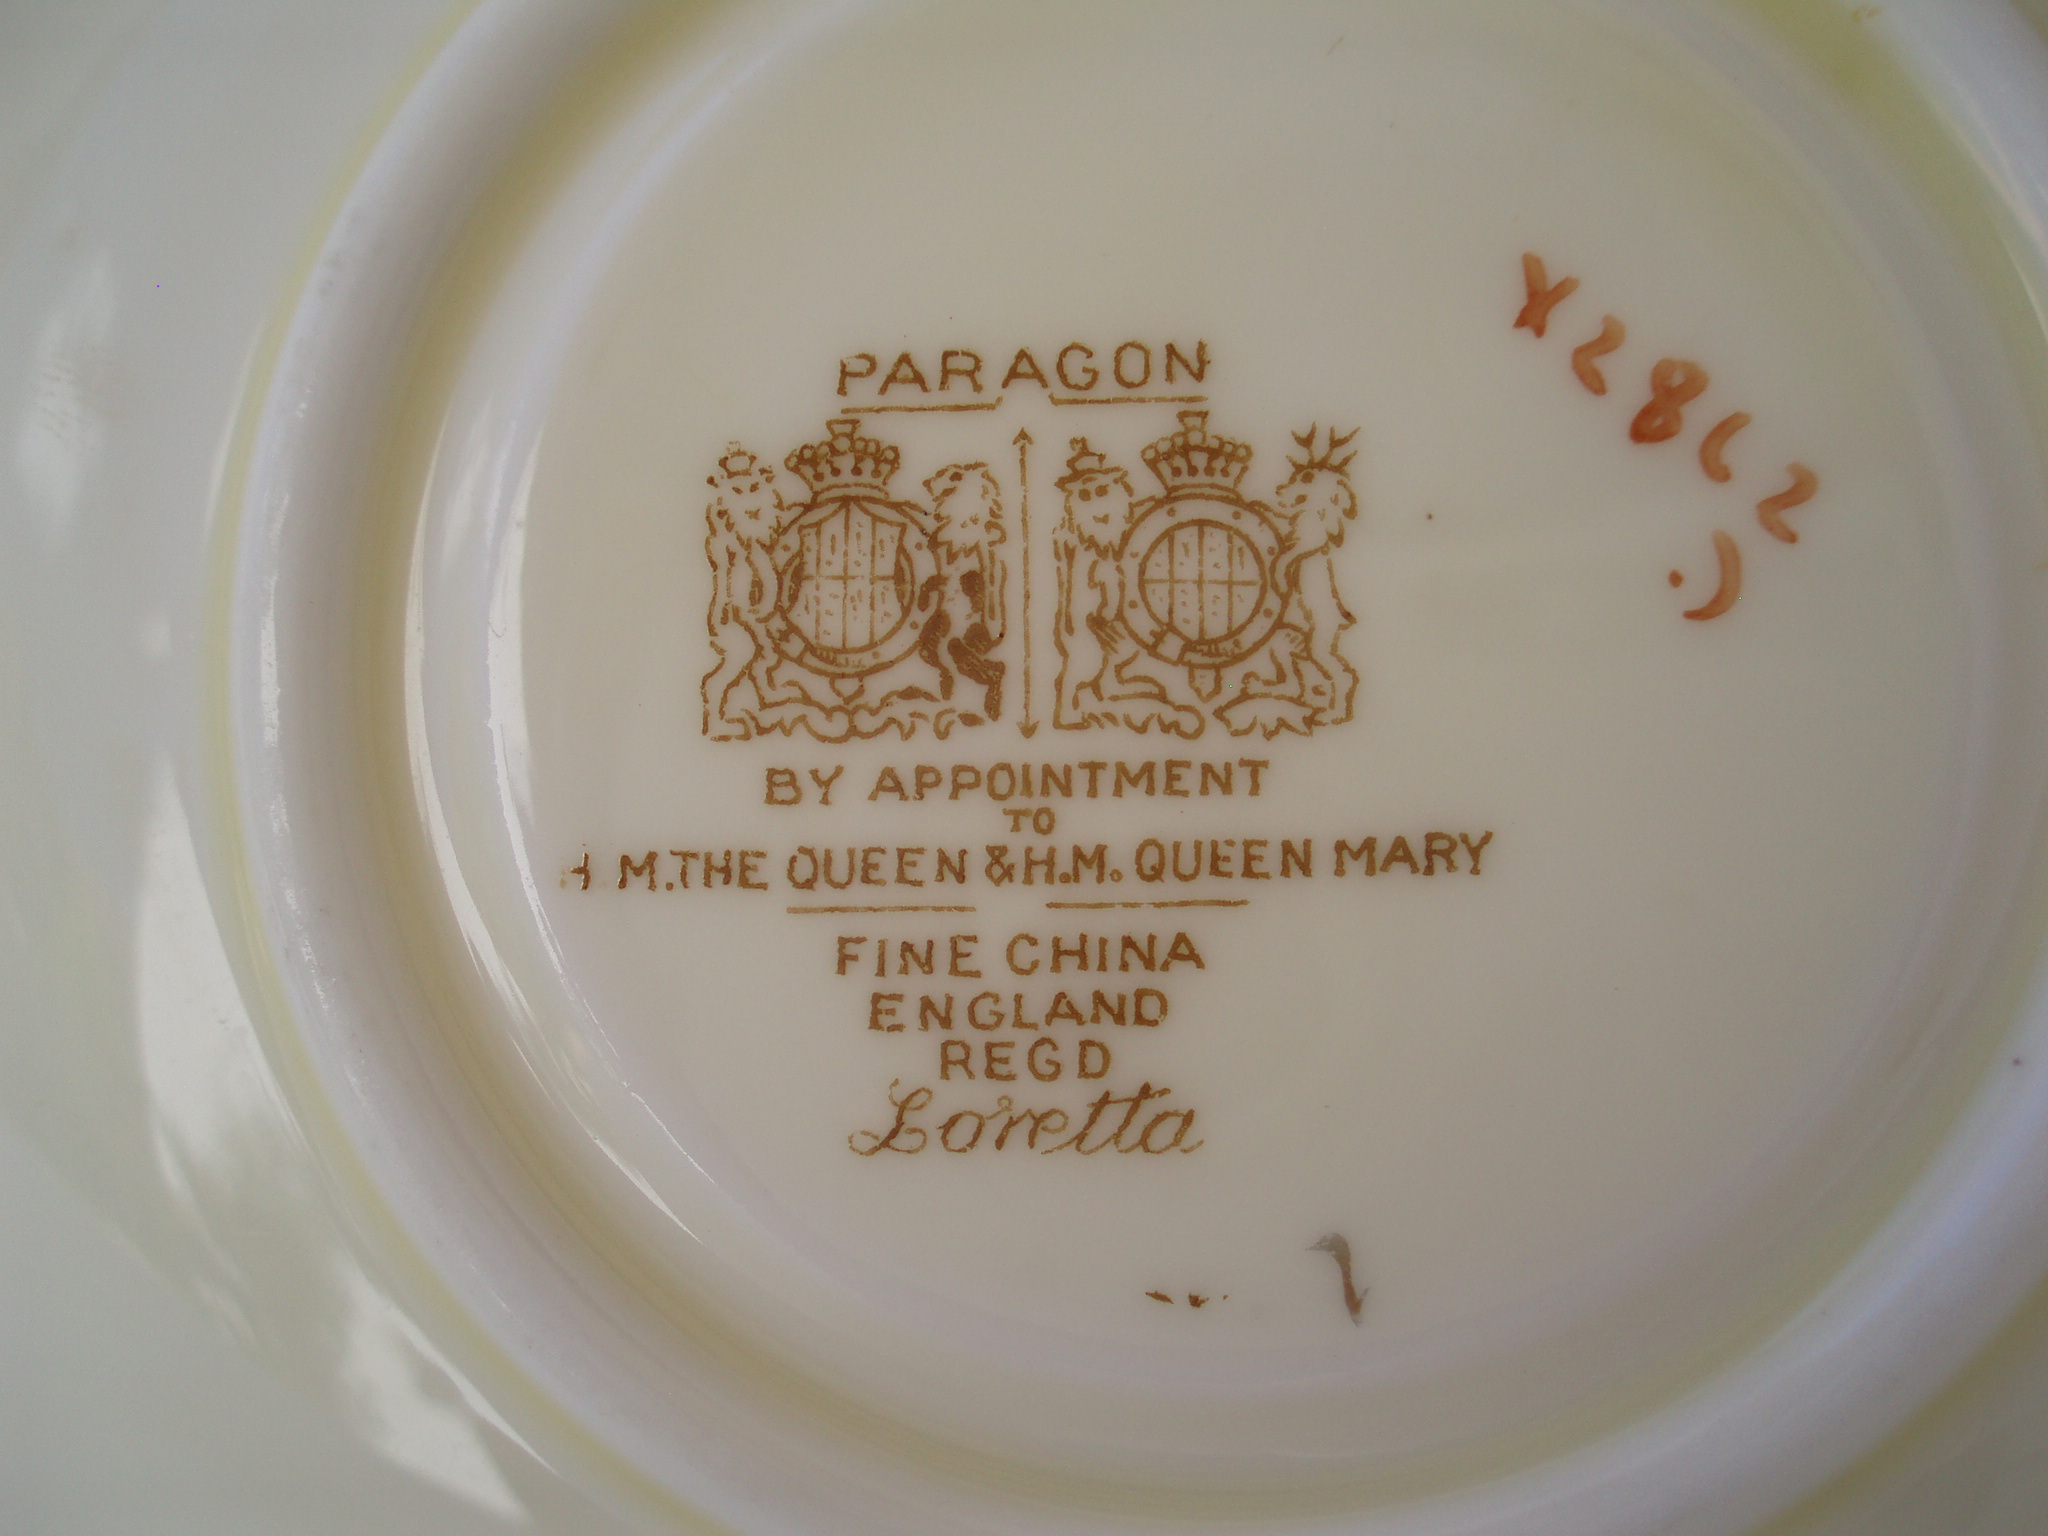 China marks paragon Mark with